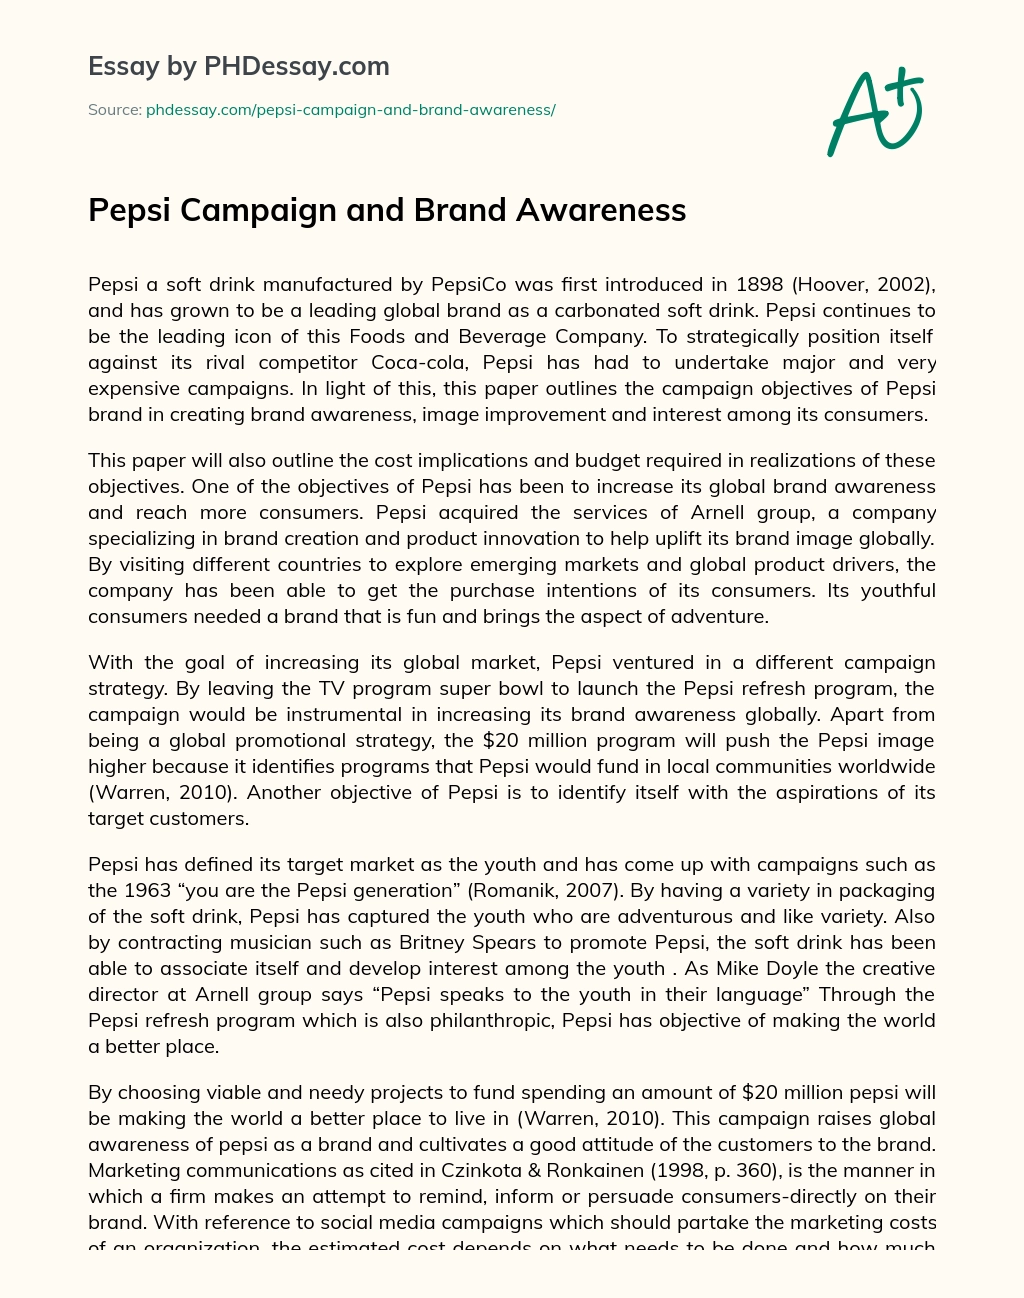 Pepsi Campaign and Brand Awareness essay